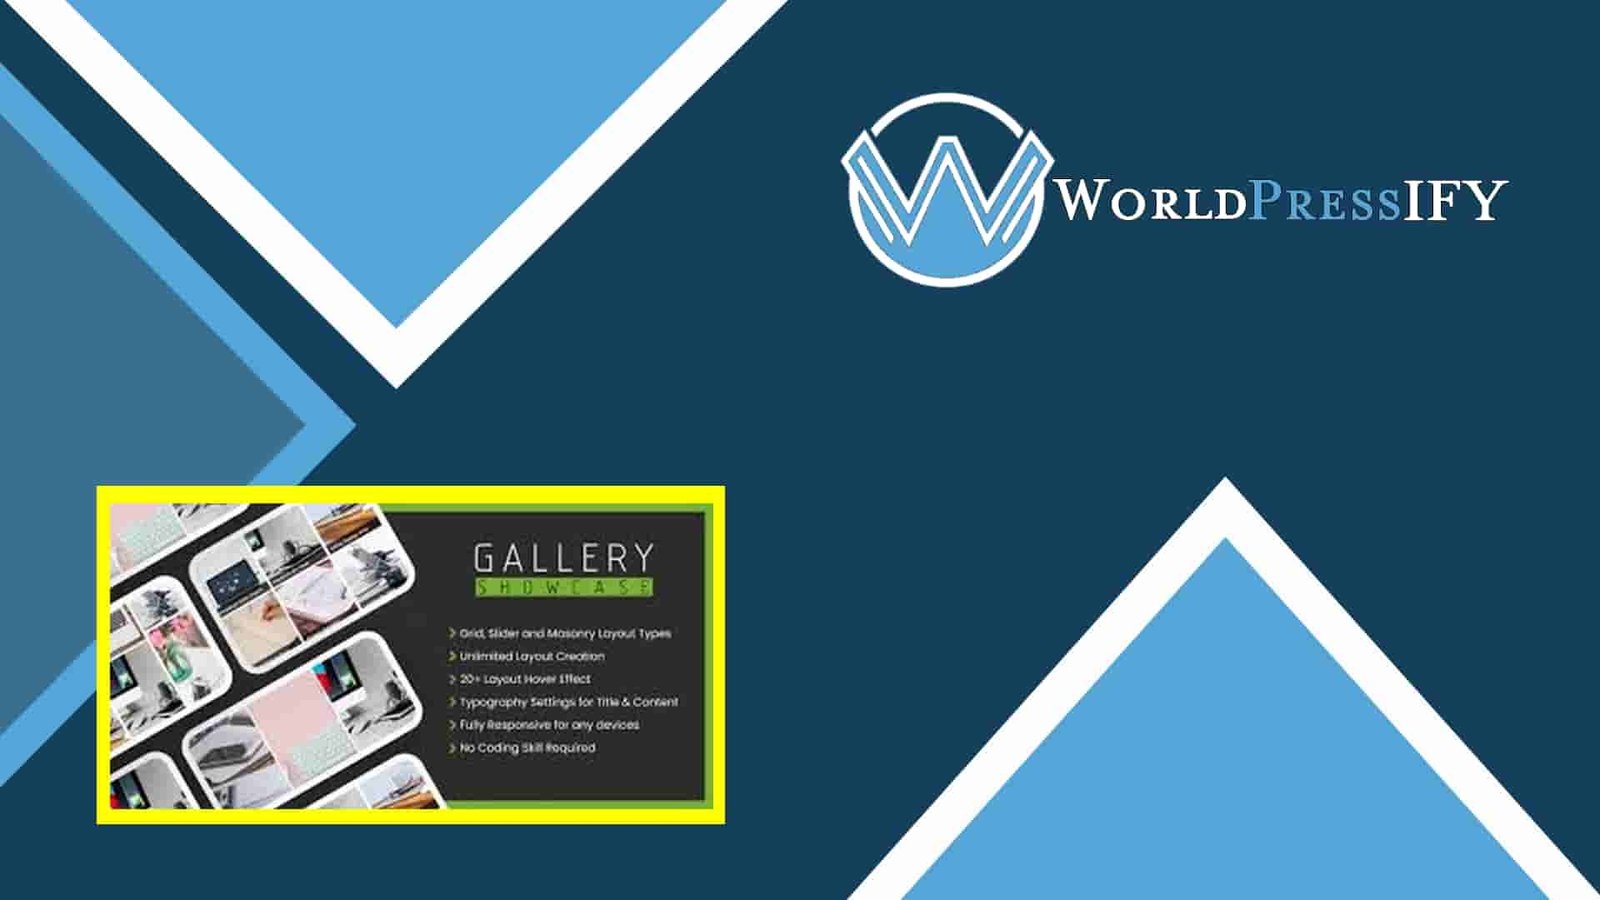 Gallery Showcase Pro for WordPress - WorldPress IFY